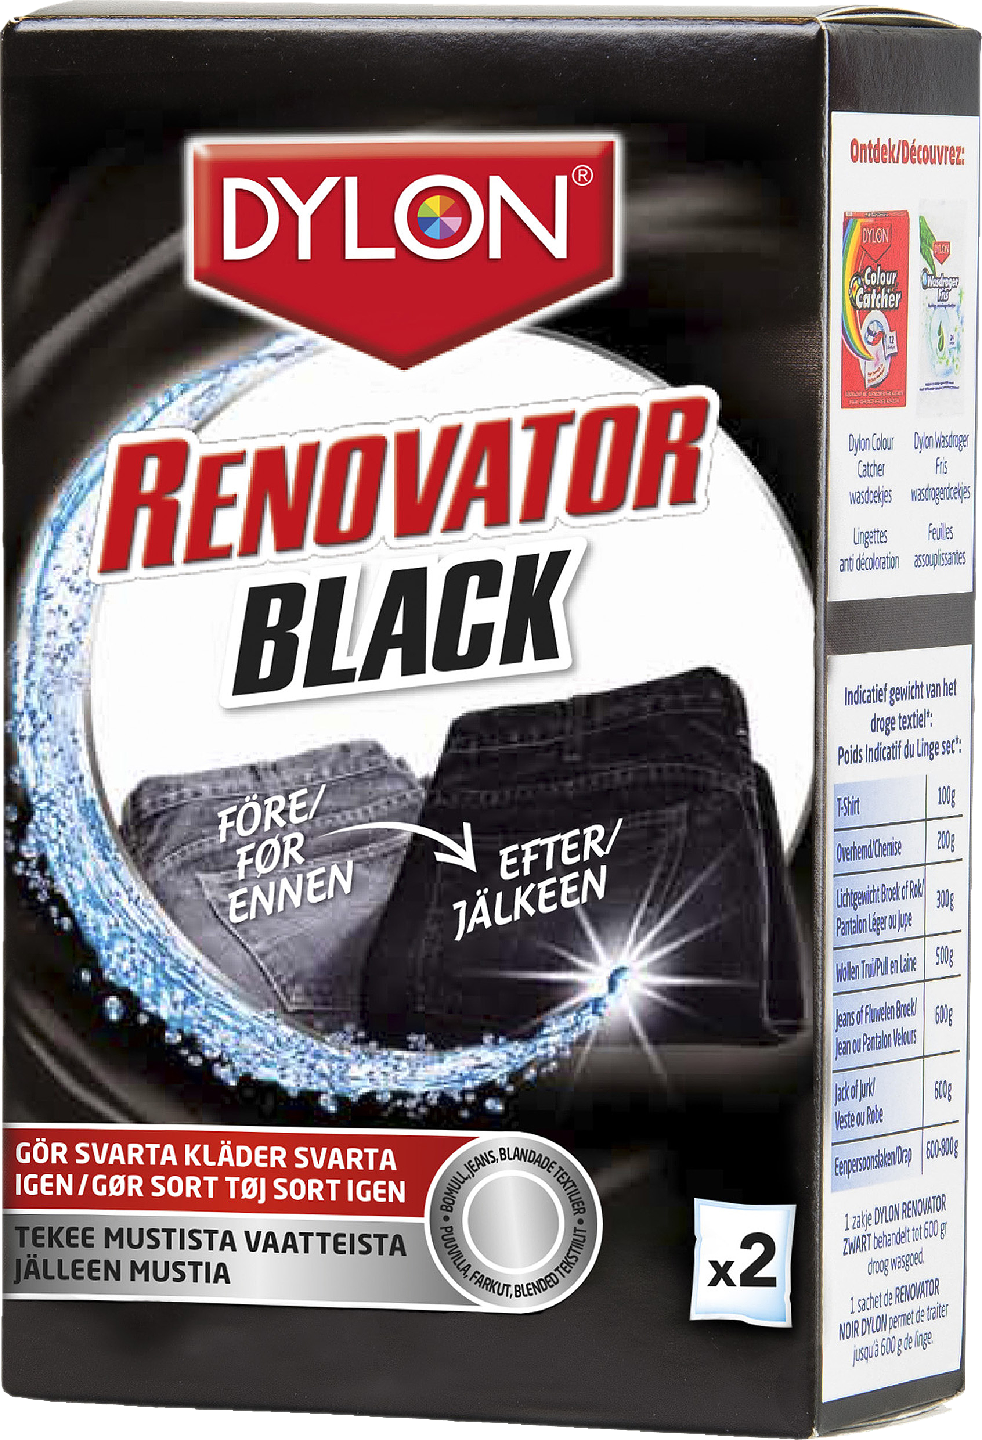 Dylon 2x50g Black Renovator värinpalauttaja